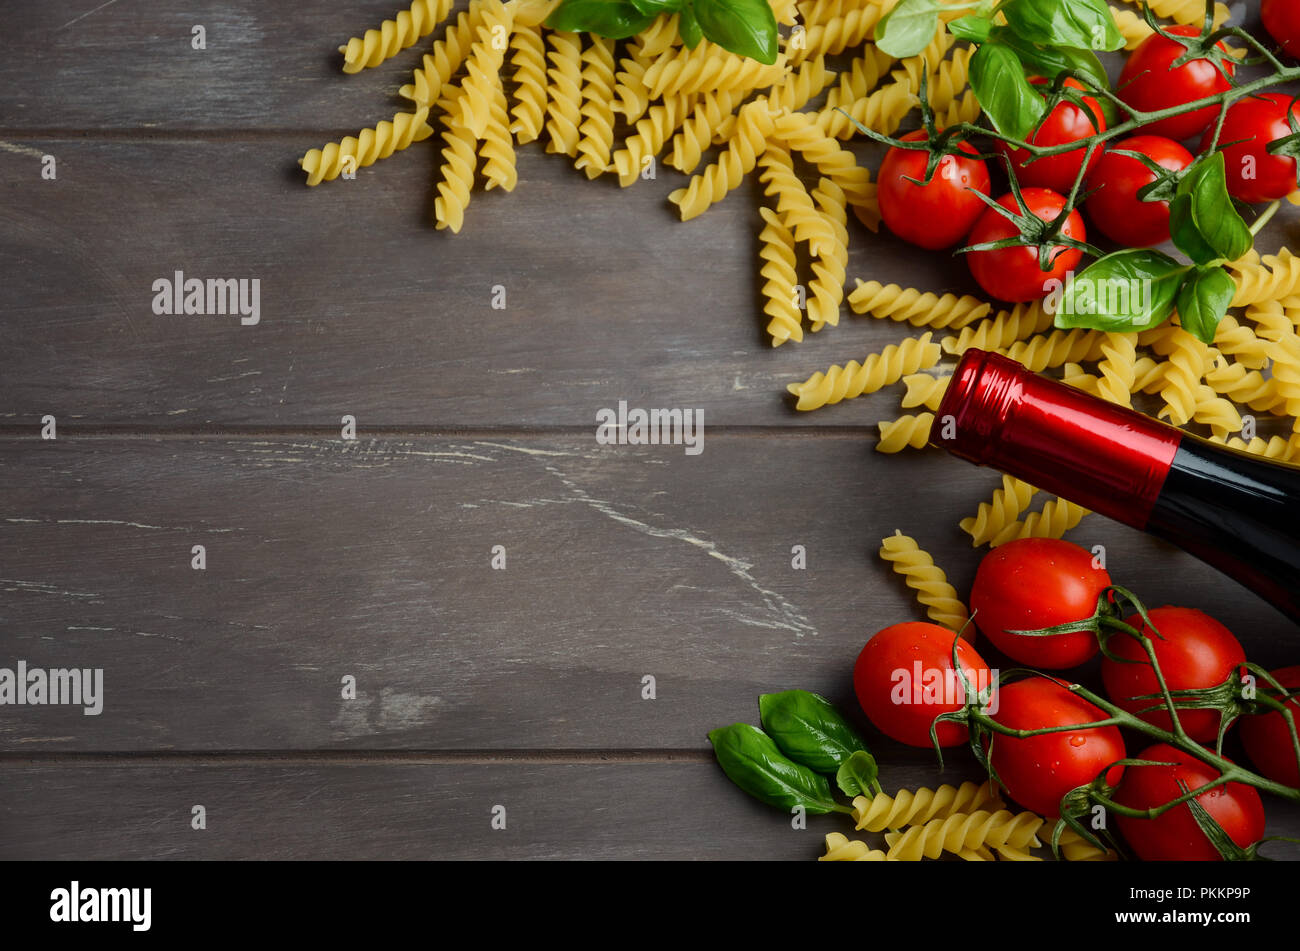 Comida italiana - materias fusilli, tomate, albahaca y vino en la mesa de madera. Foto de stock